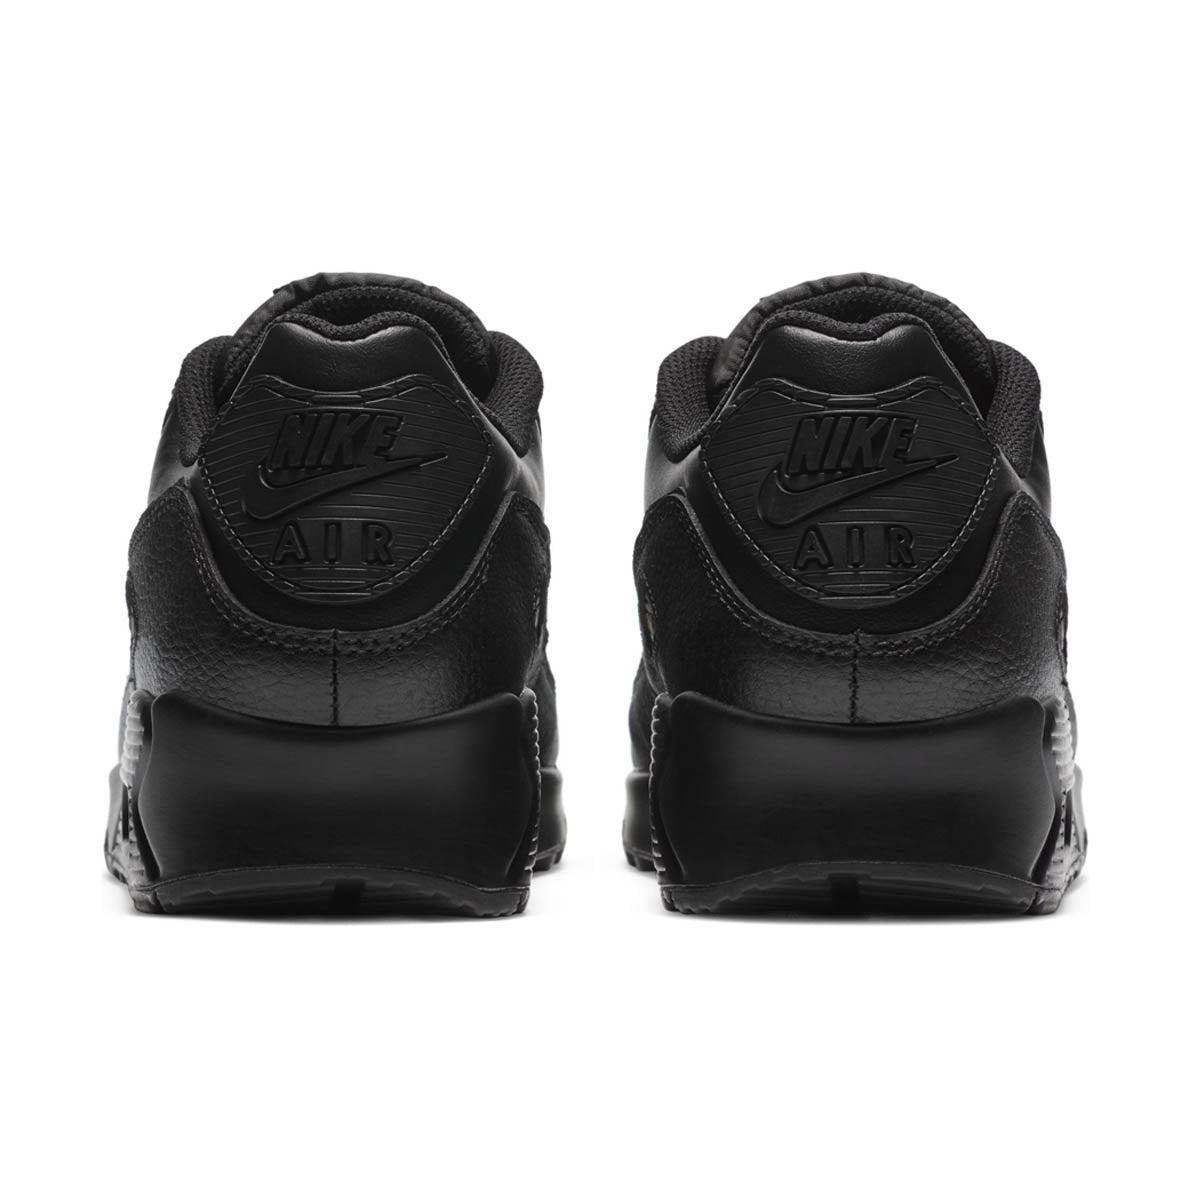 Air Max 90 LTR Men's Shoe